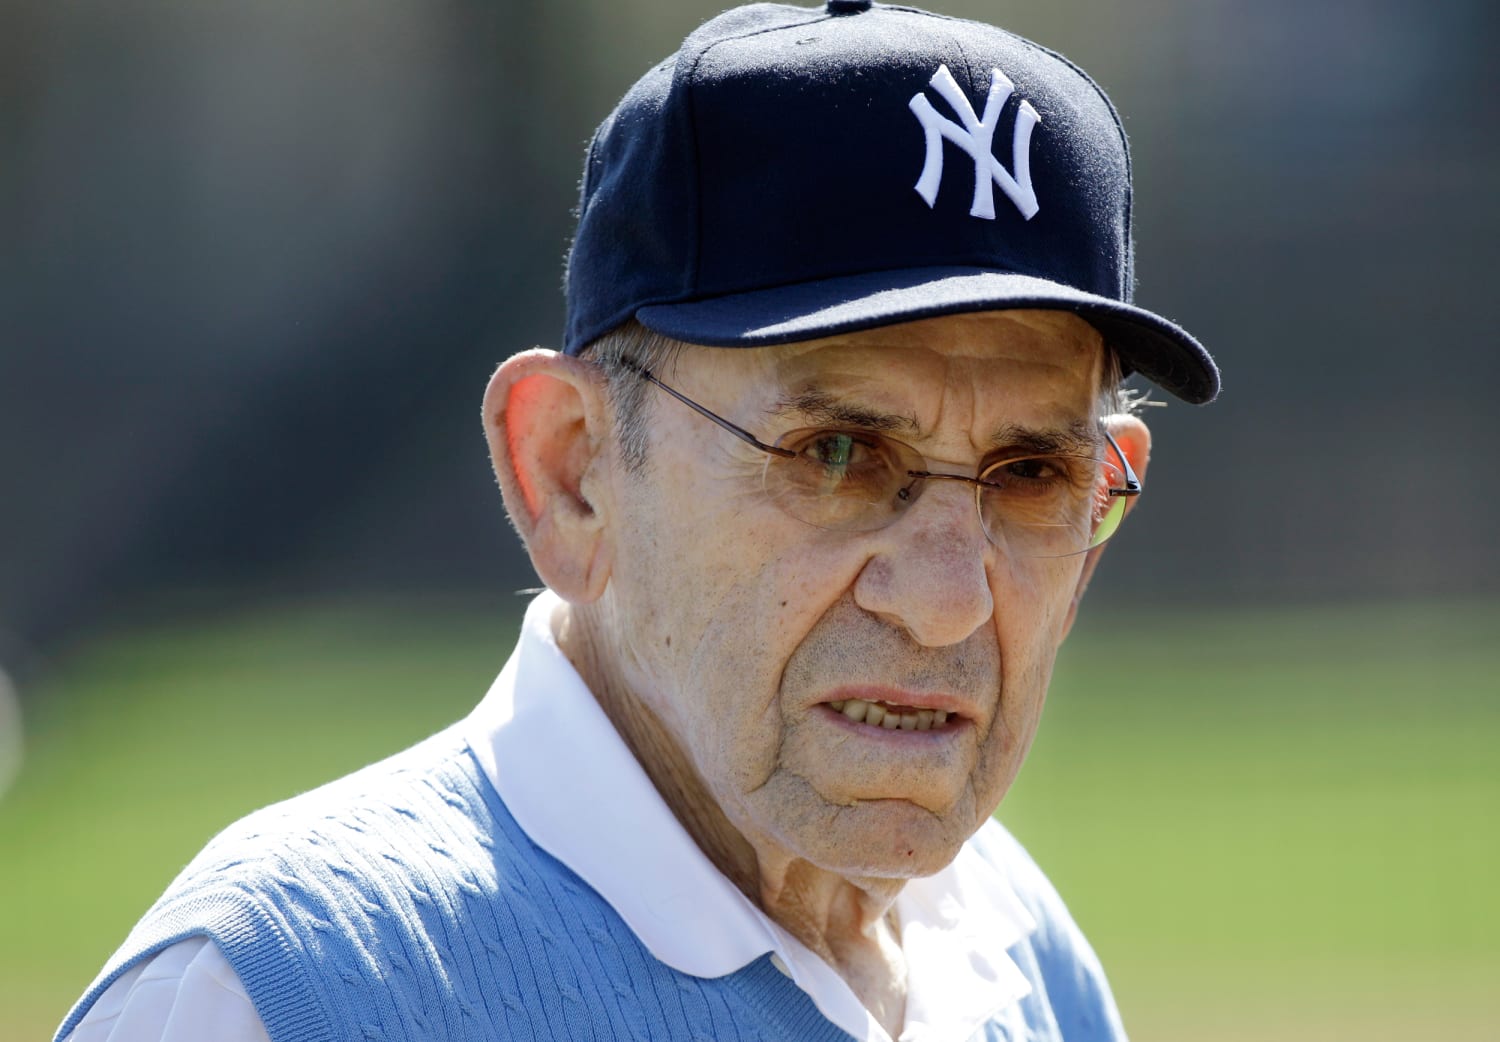 Hall of Fame catcher Yogi Berra dies at 90 - The Washington Post